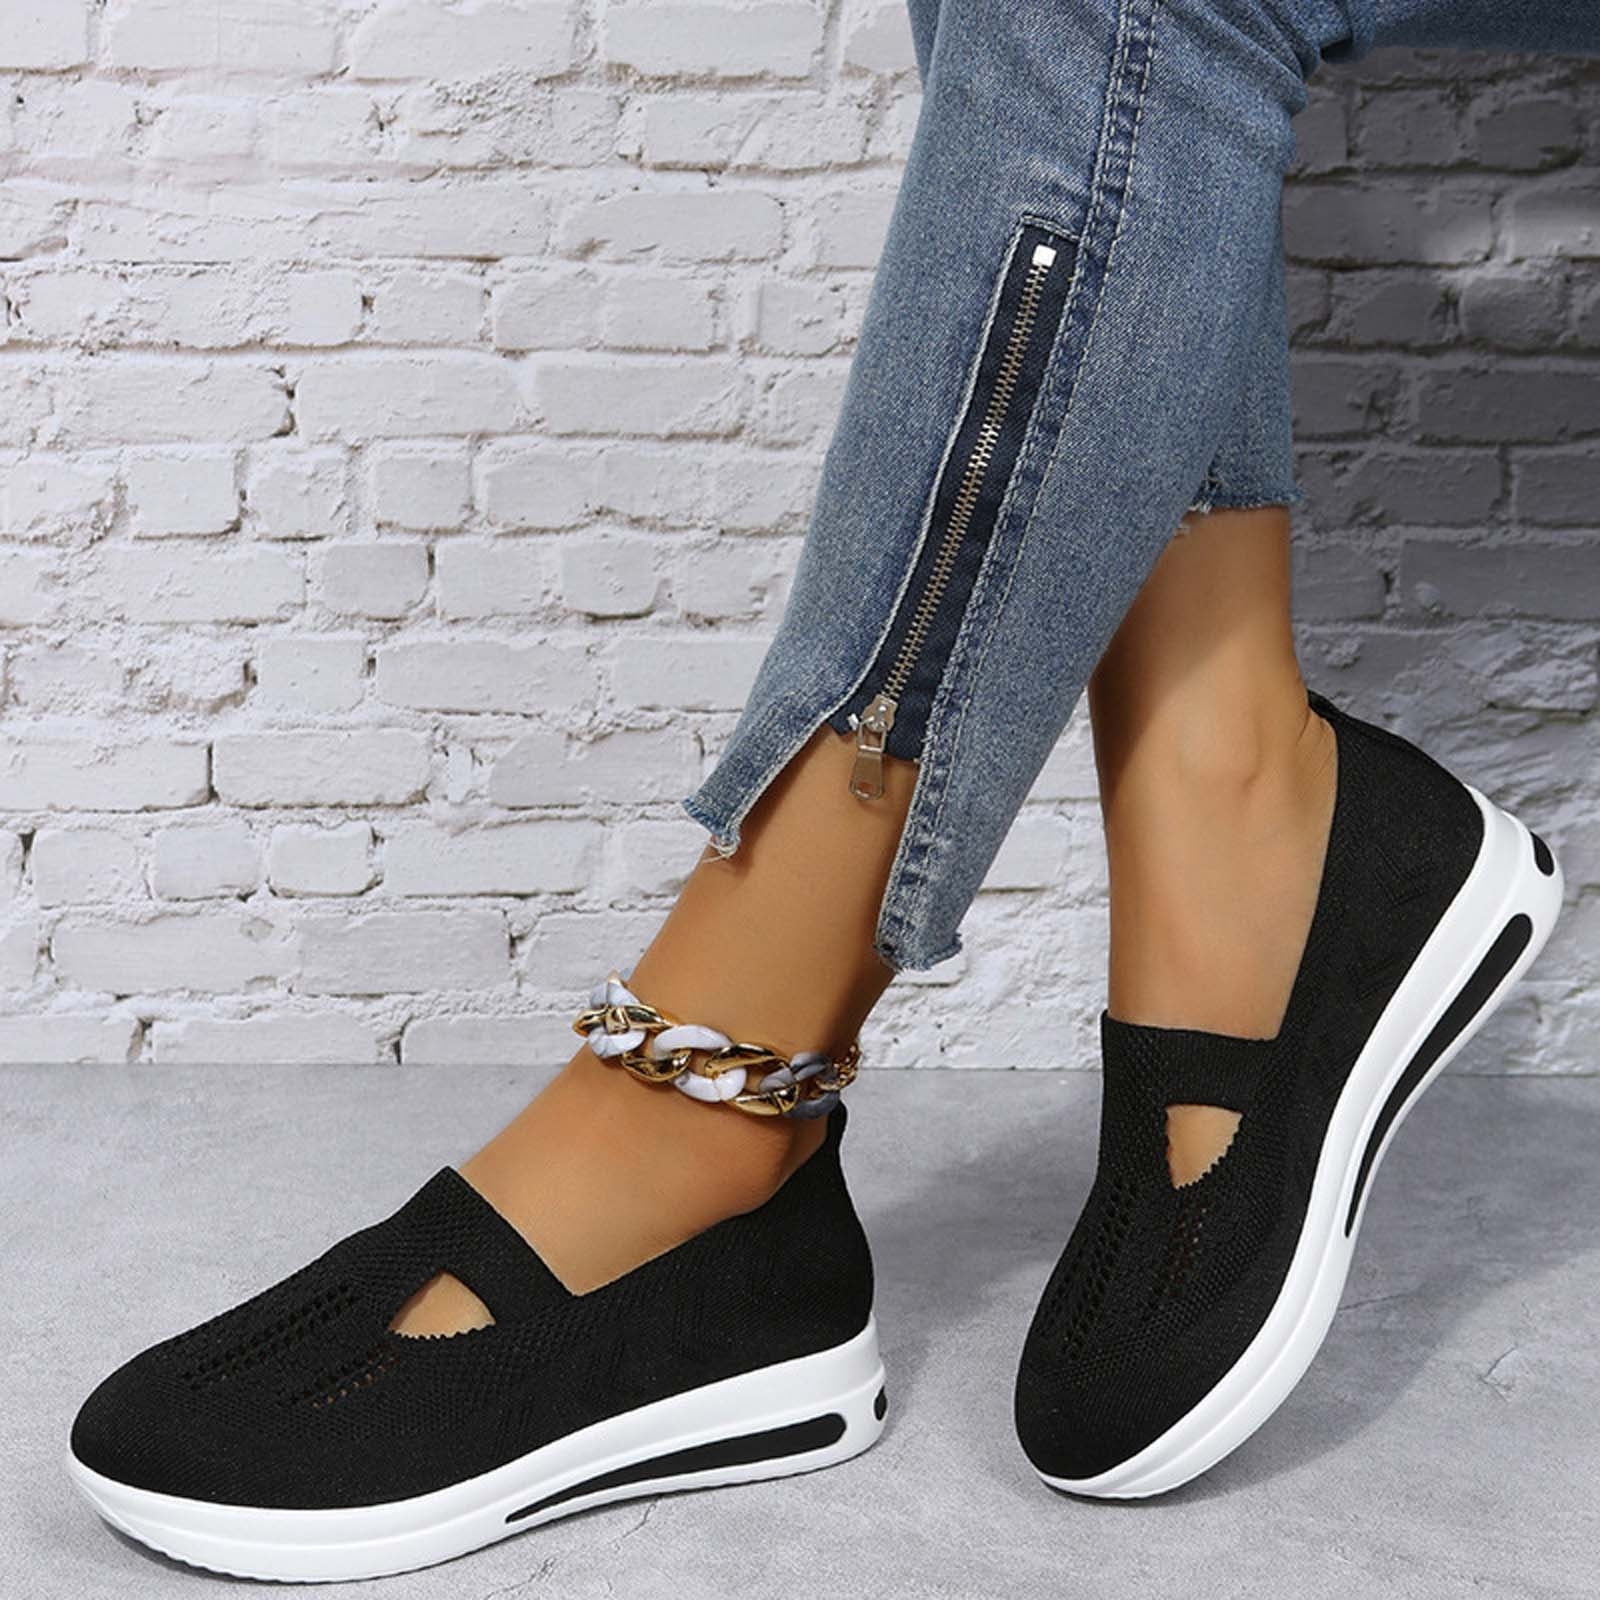 EQWLJWE Women's Orthopedic Slip-On Walking Shoes, Comfort Loafers Wide ...